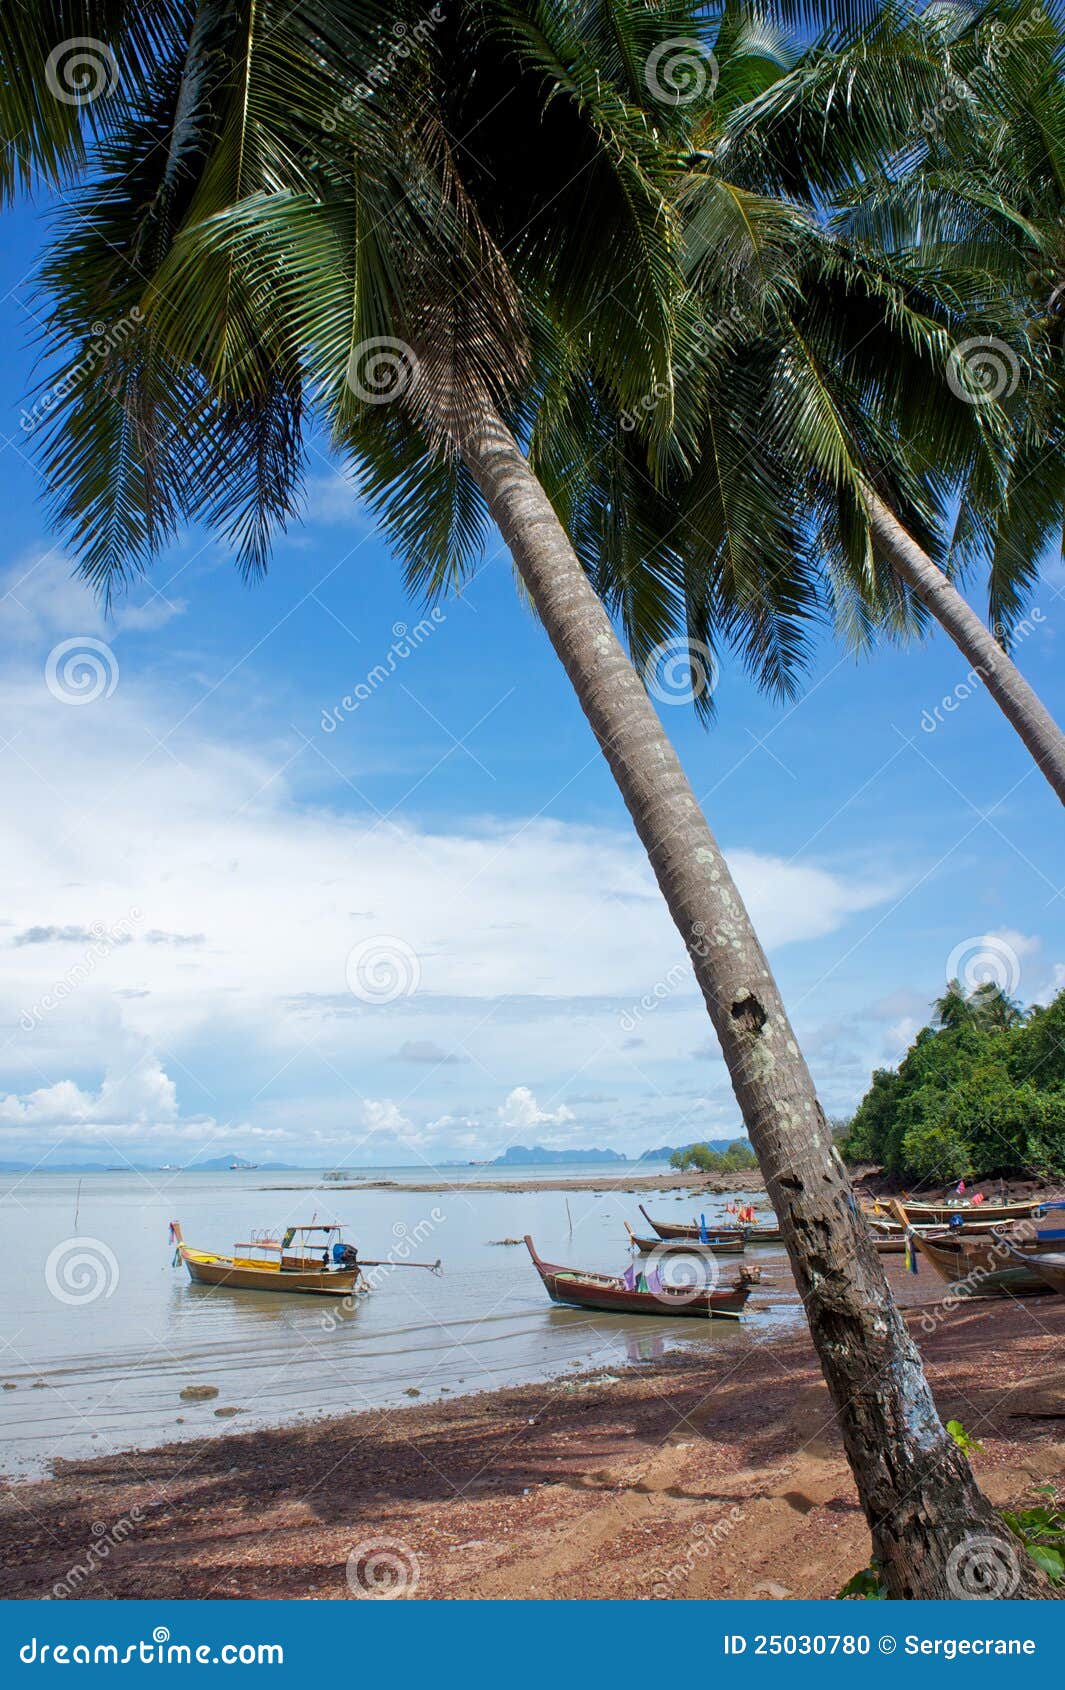 fishing boats under palmtrees